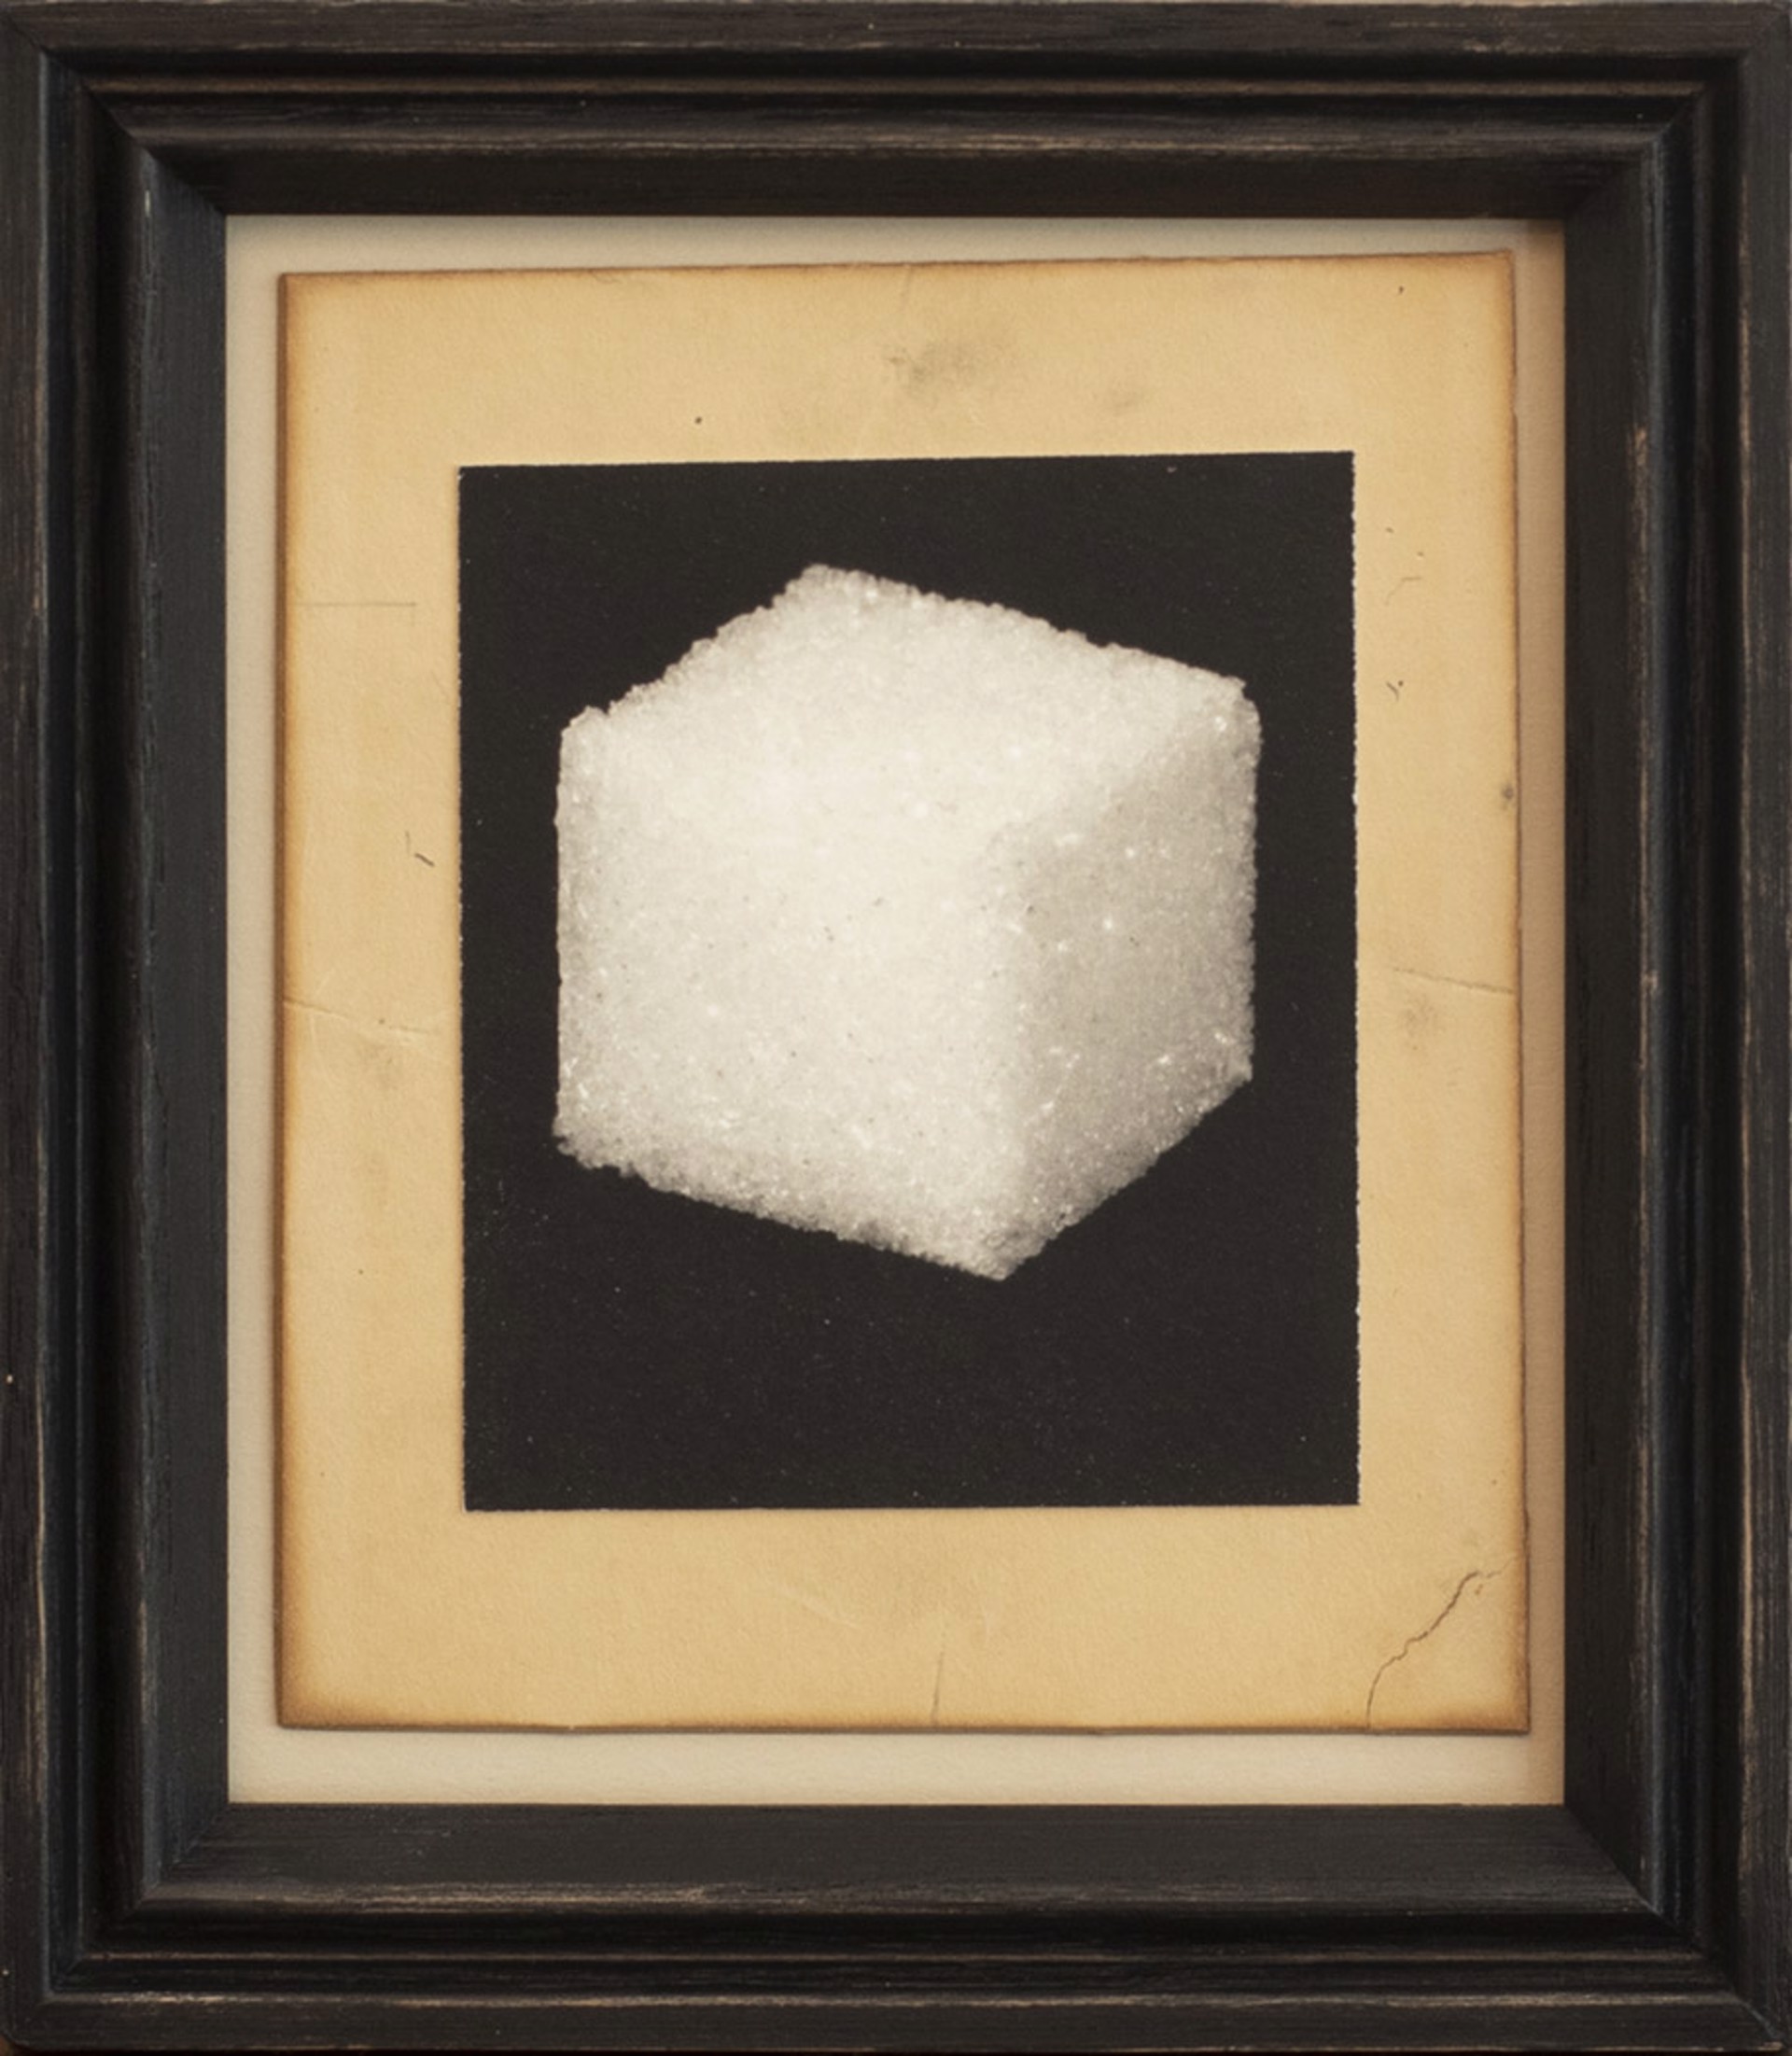 Sugar Cube Variant by Jefferson Hayman